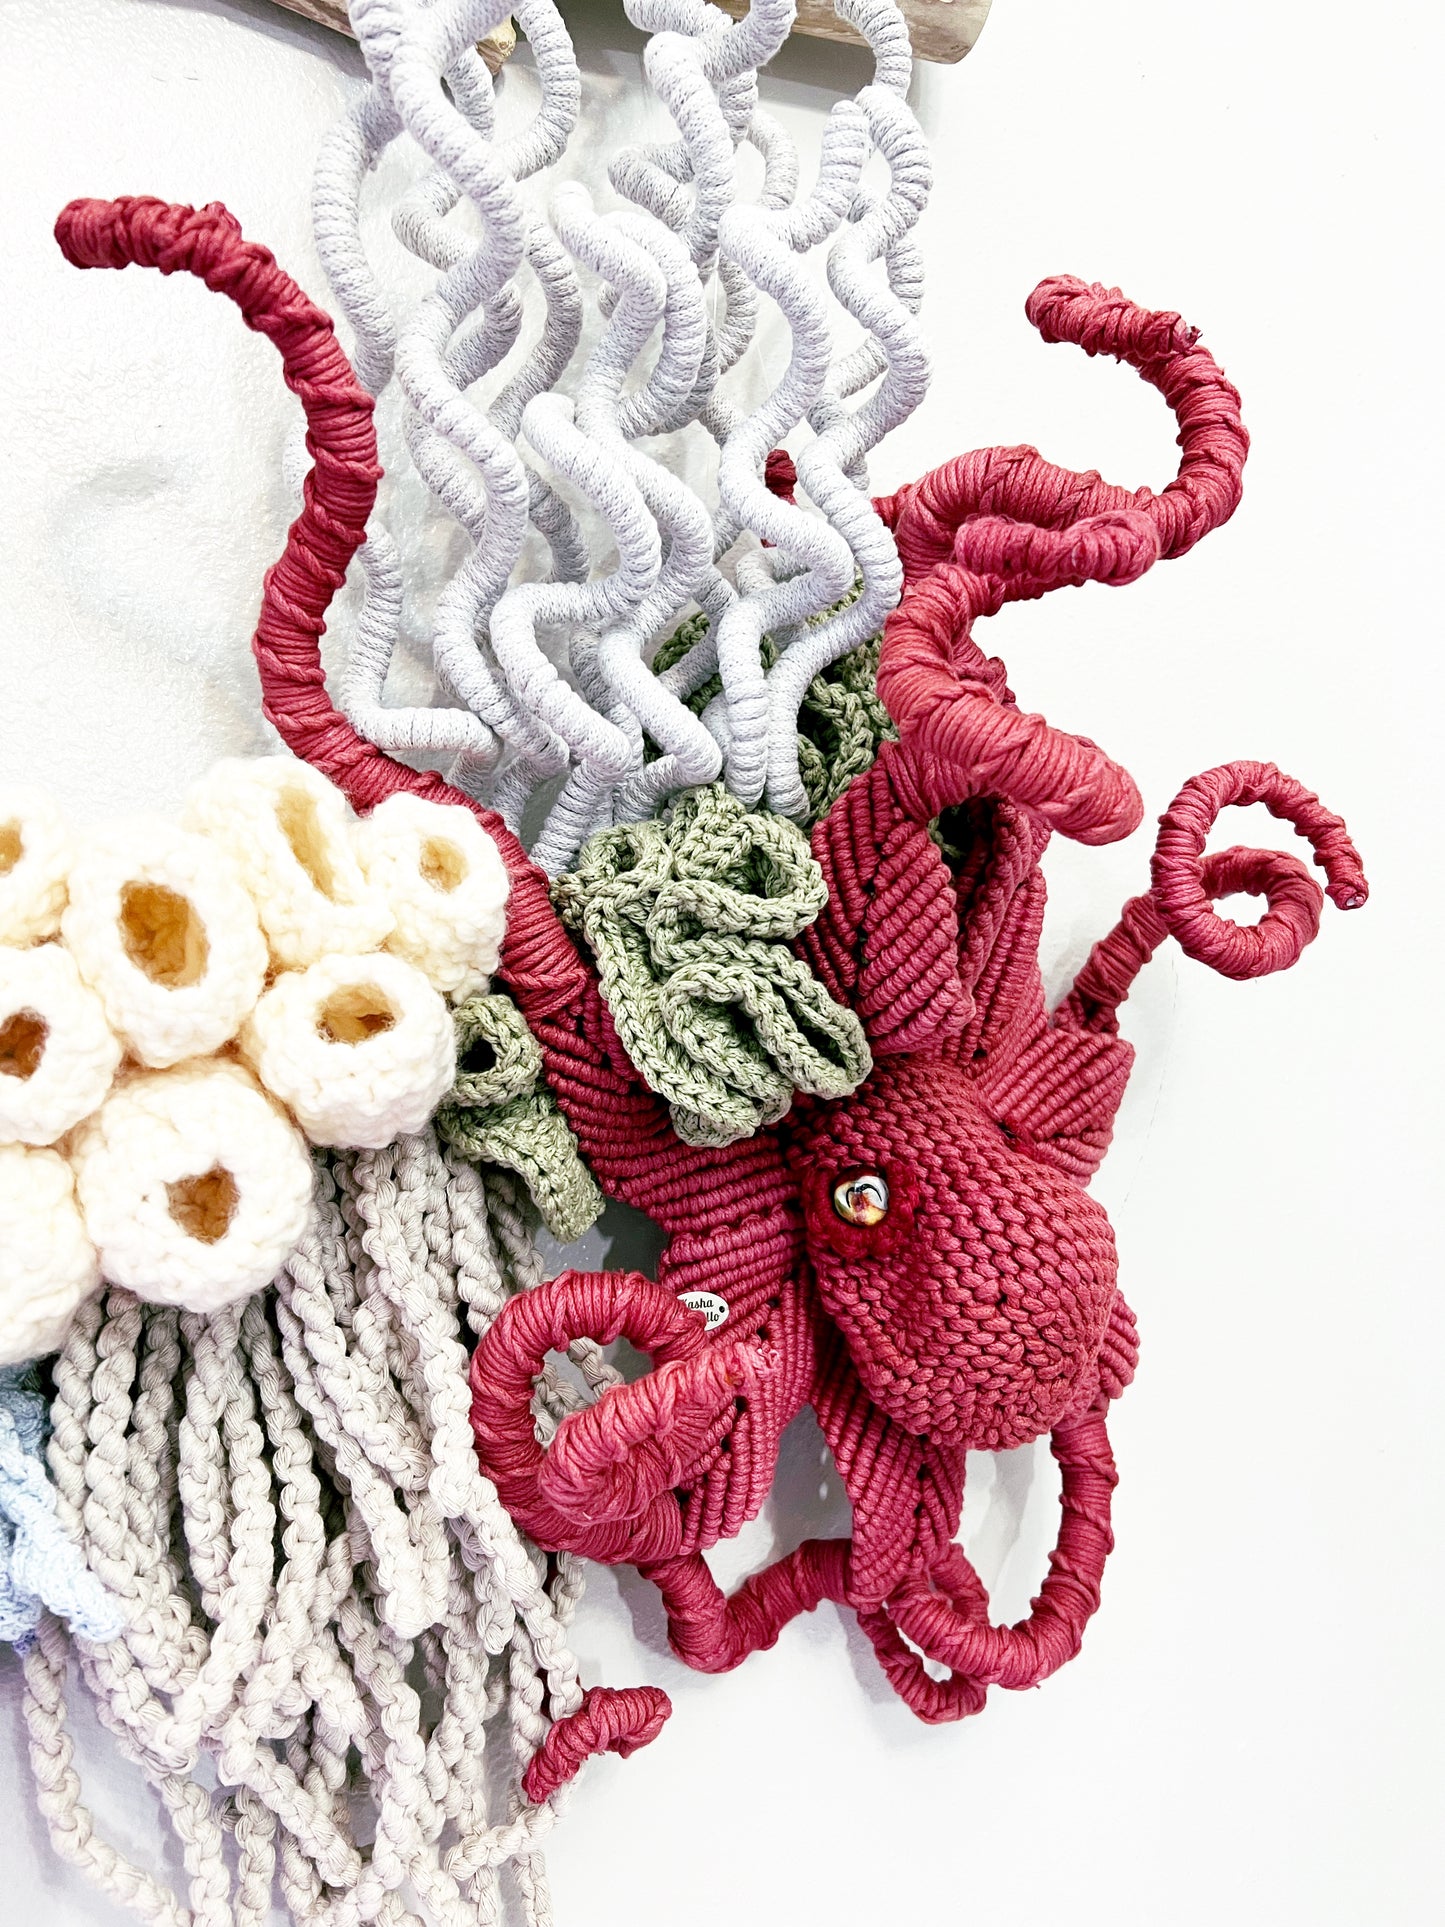 Commission only// Large Macrame Octopus and Moorish idol fish